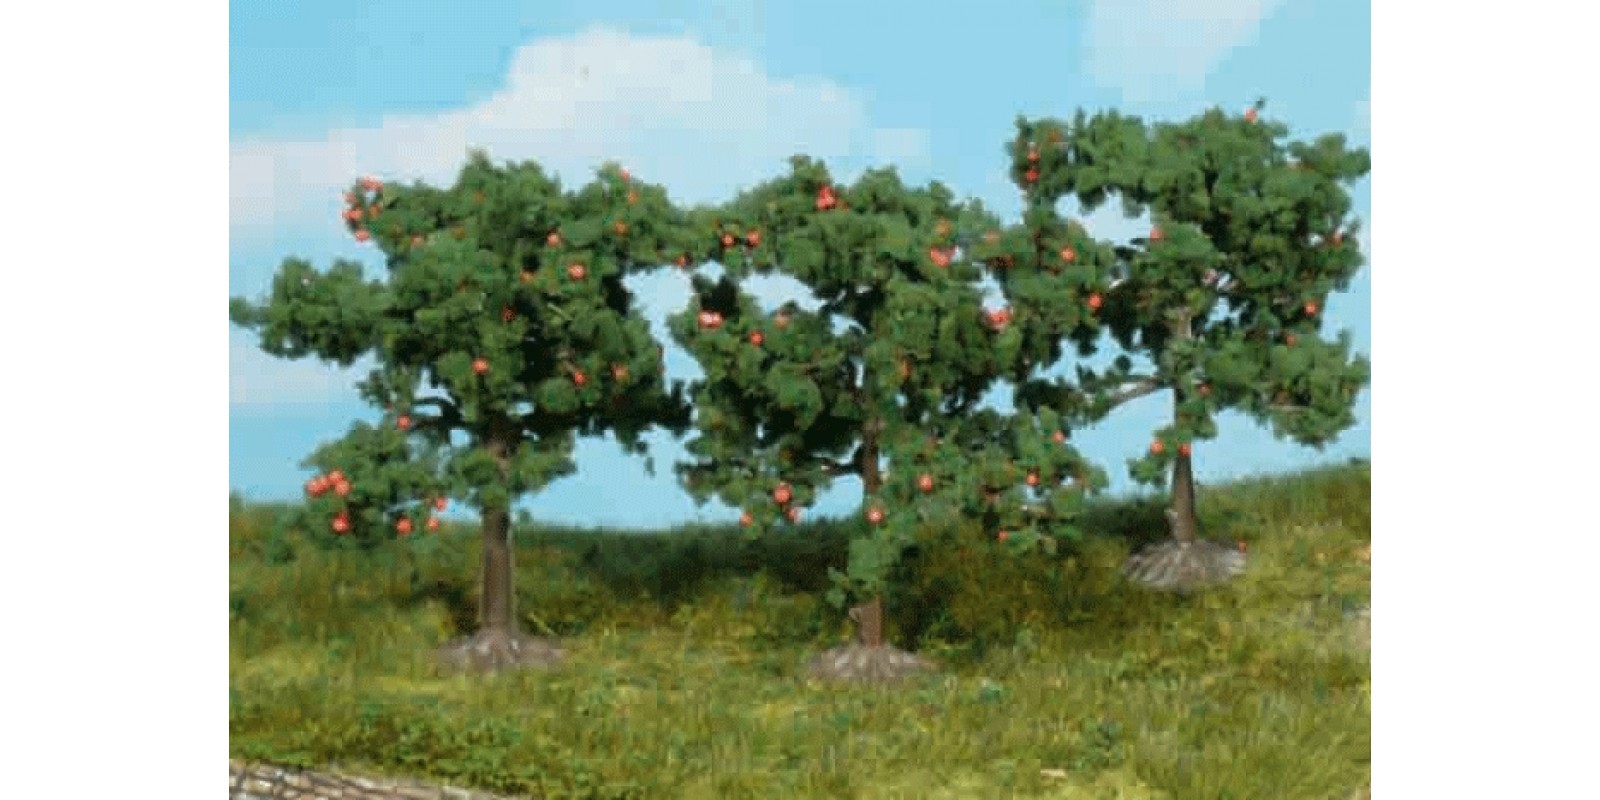 He1160 / 3 Apfelbäume 8 cm